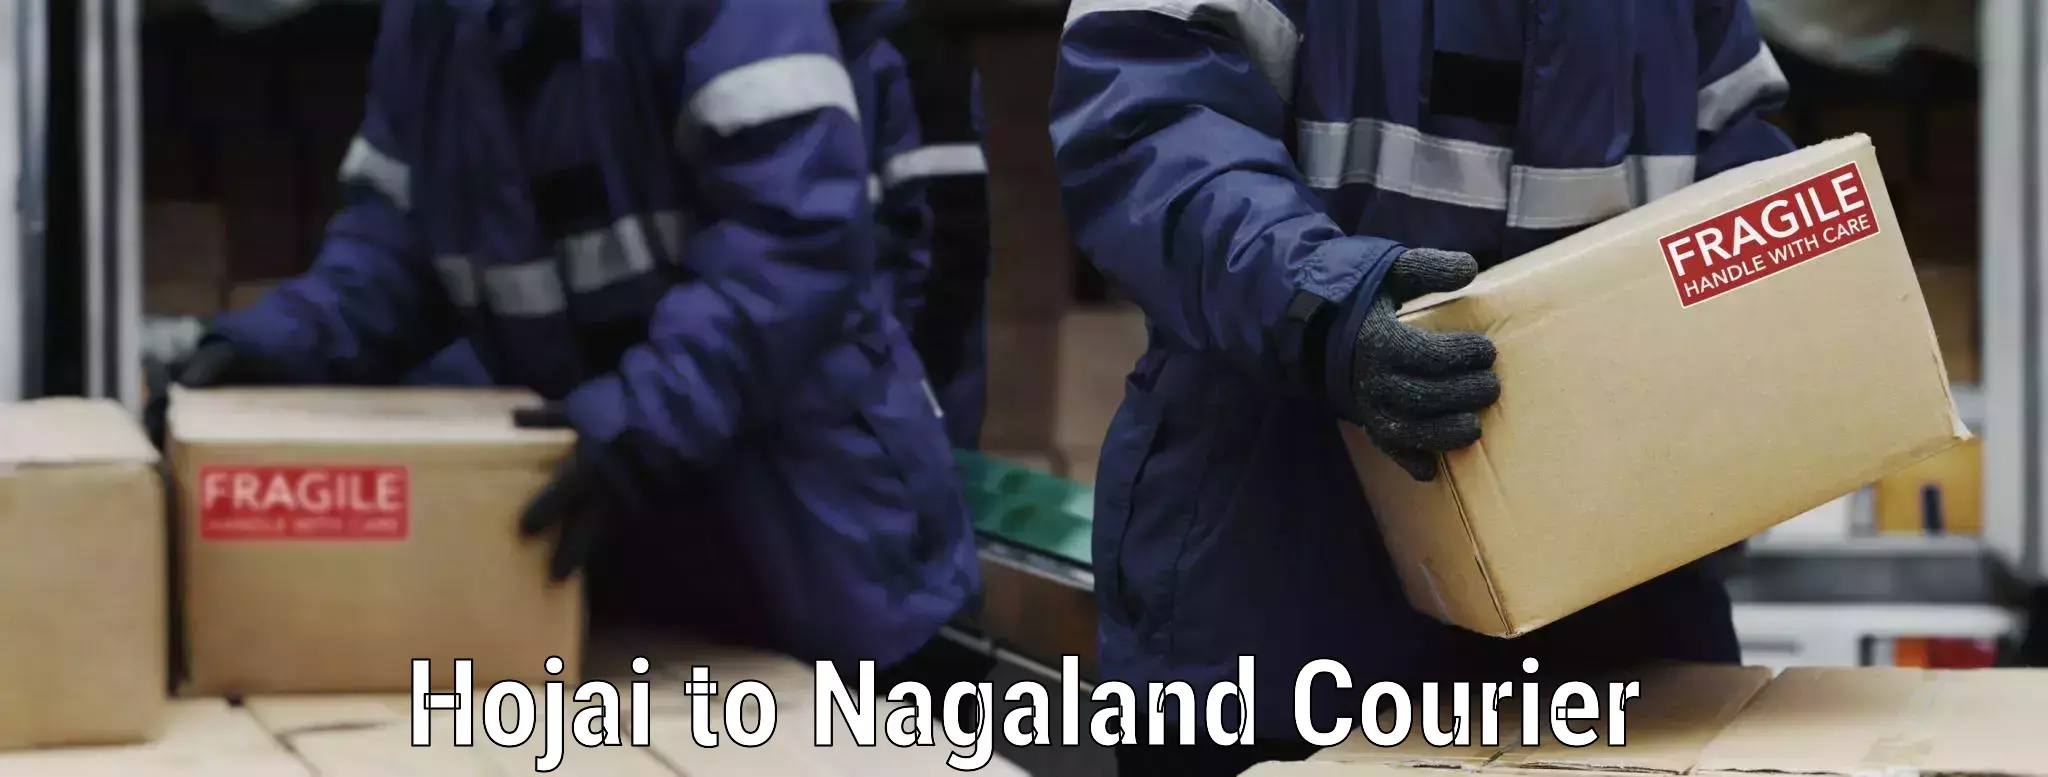 Reliable movers Hojai to Nagaland